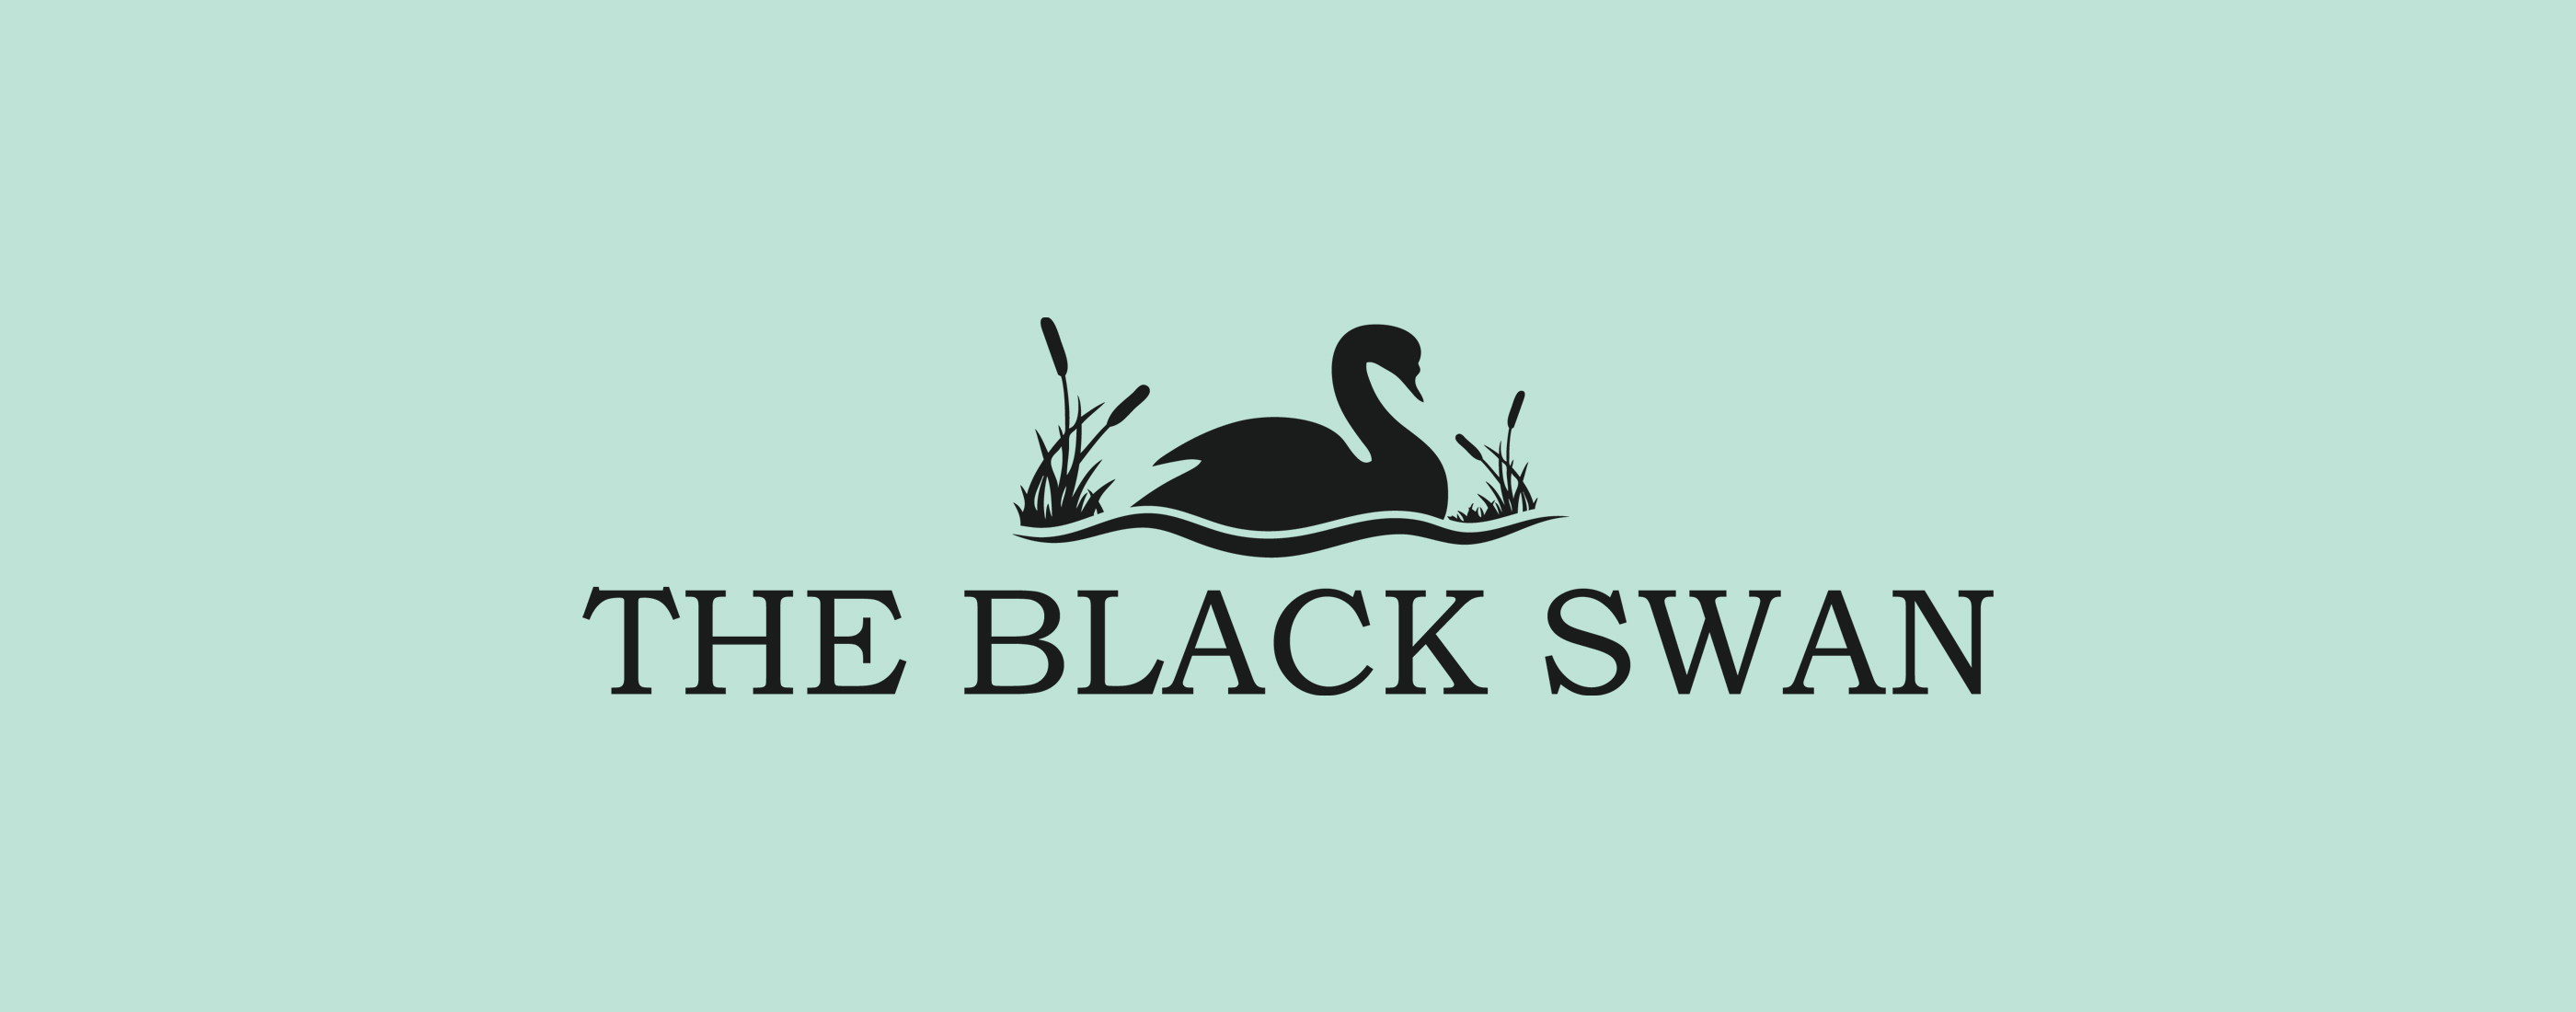 The Black Swan, brand apnd print management through creative design